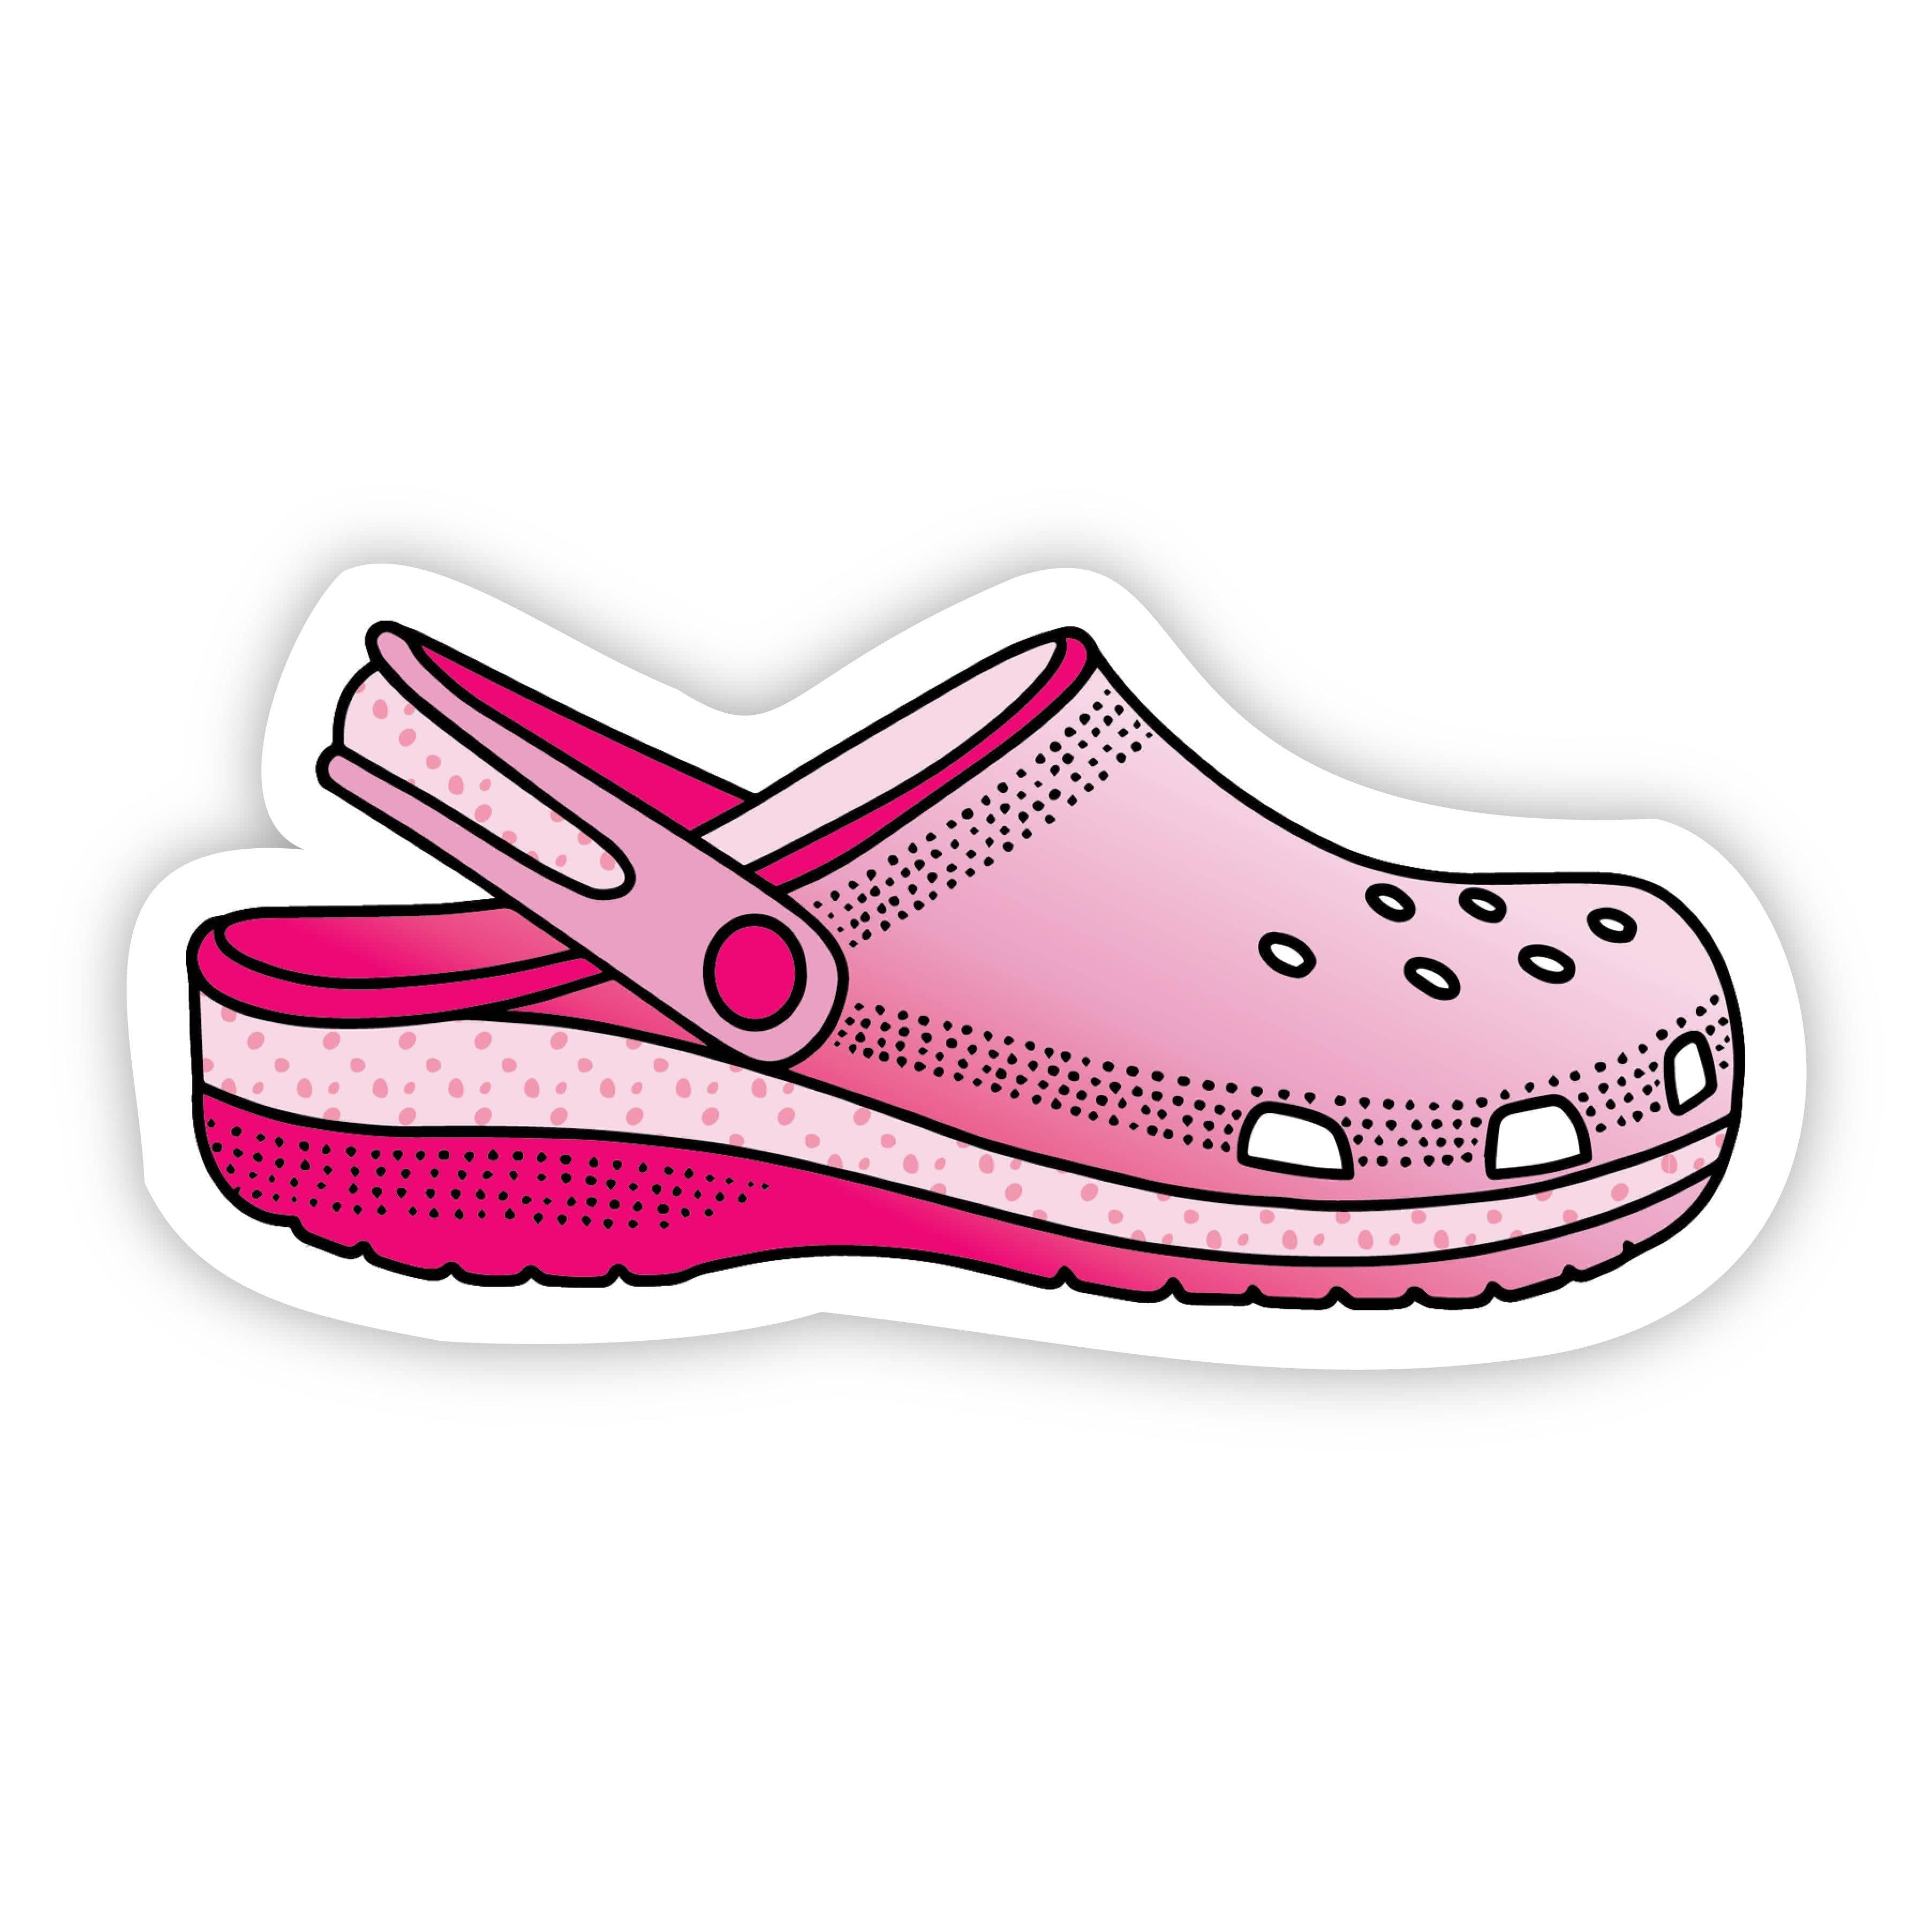 Croc - Croc - Sticker | TeePublic